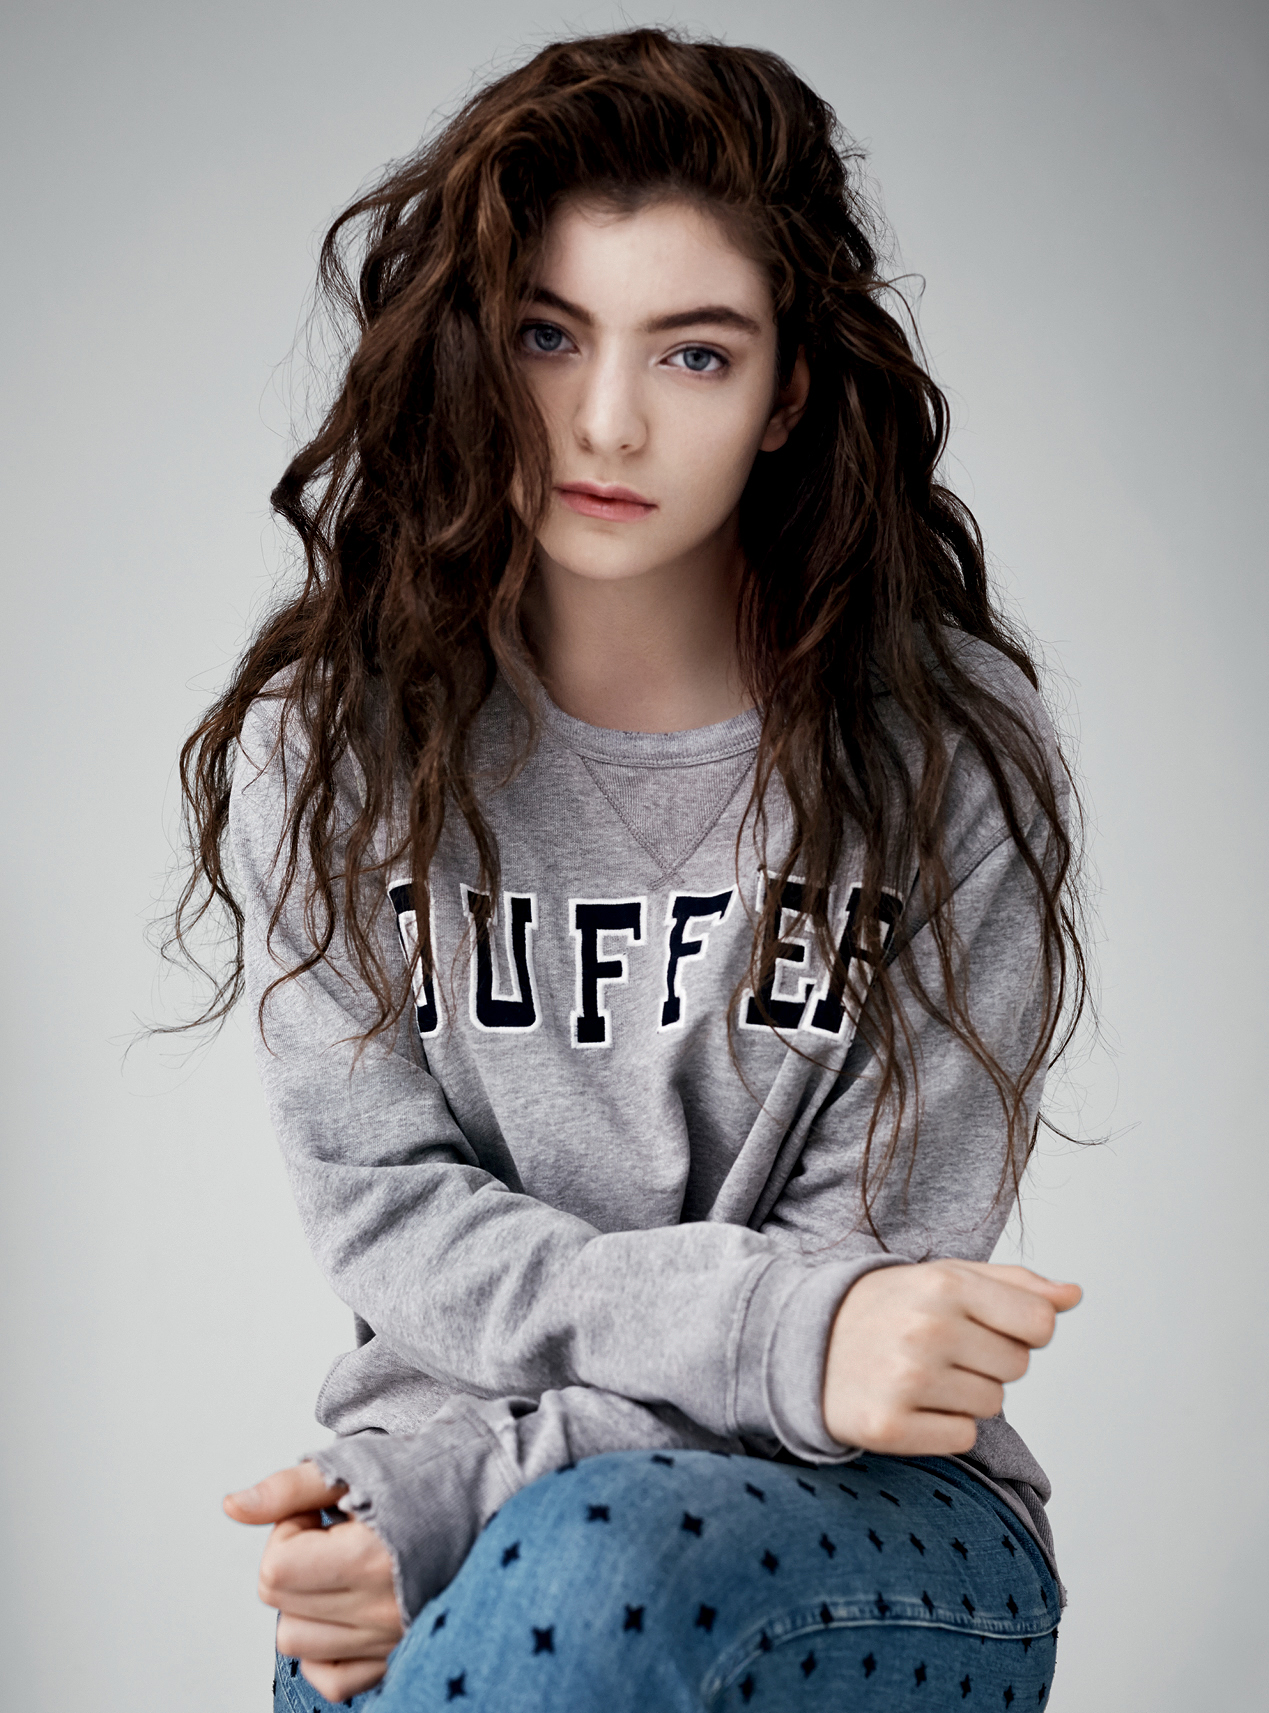 Lorde Women Singer Brunette Long Hair Sweater Women Indoors Simple Background 1269x1713